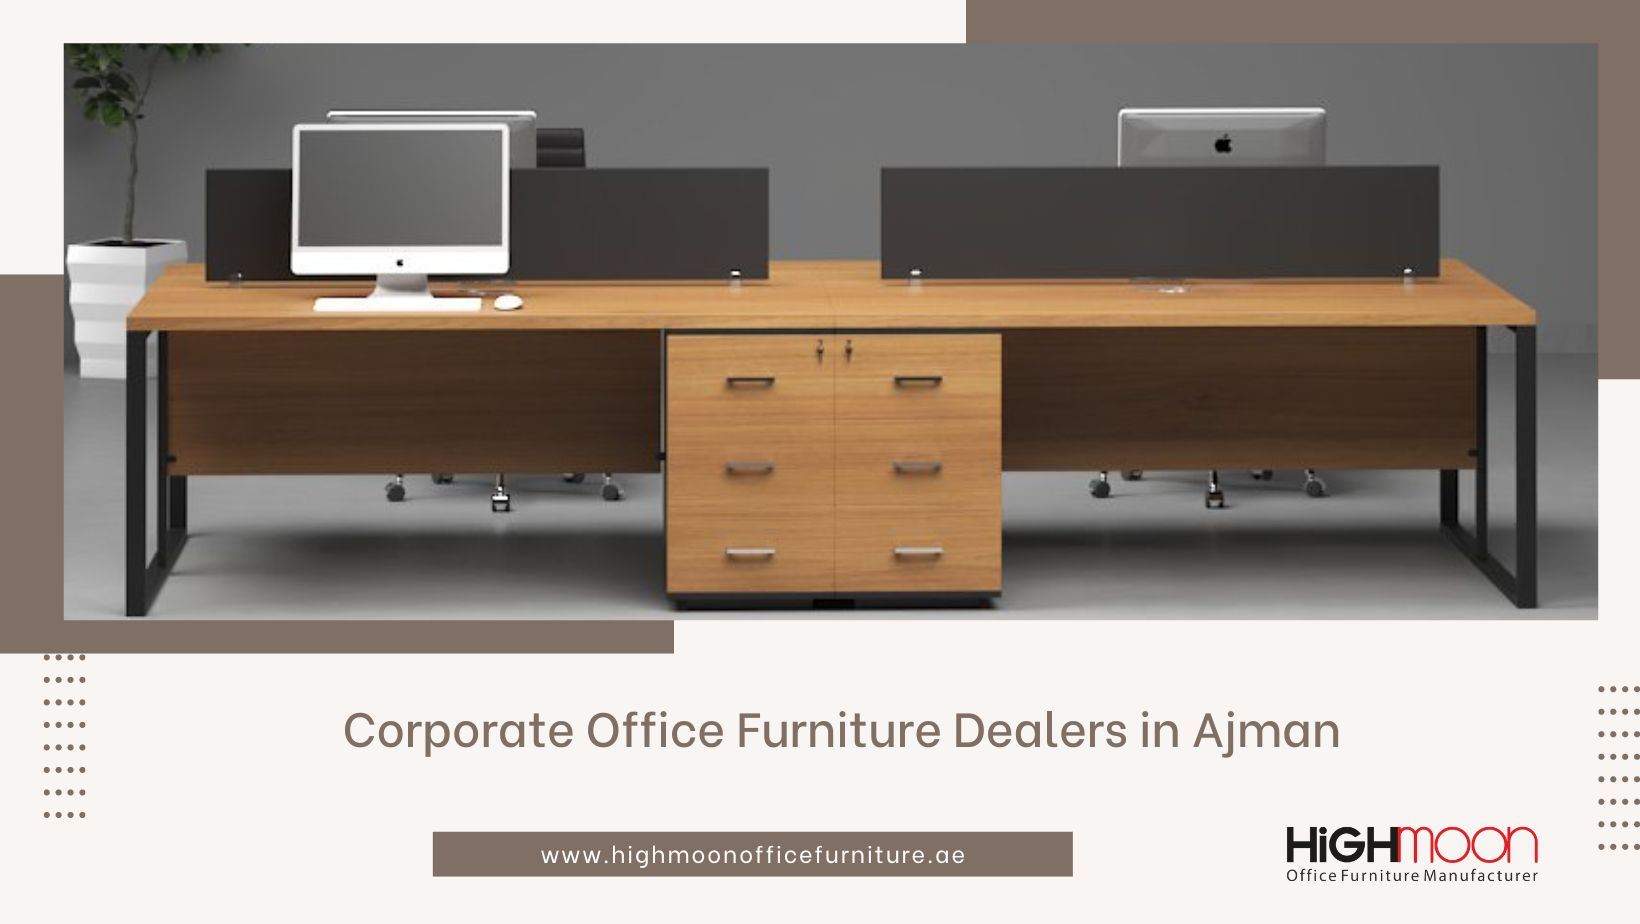 Corporate Office Furniture Dealers in Ajman